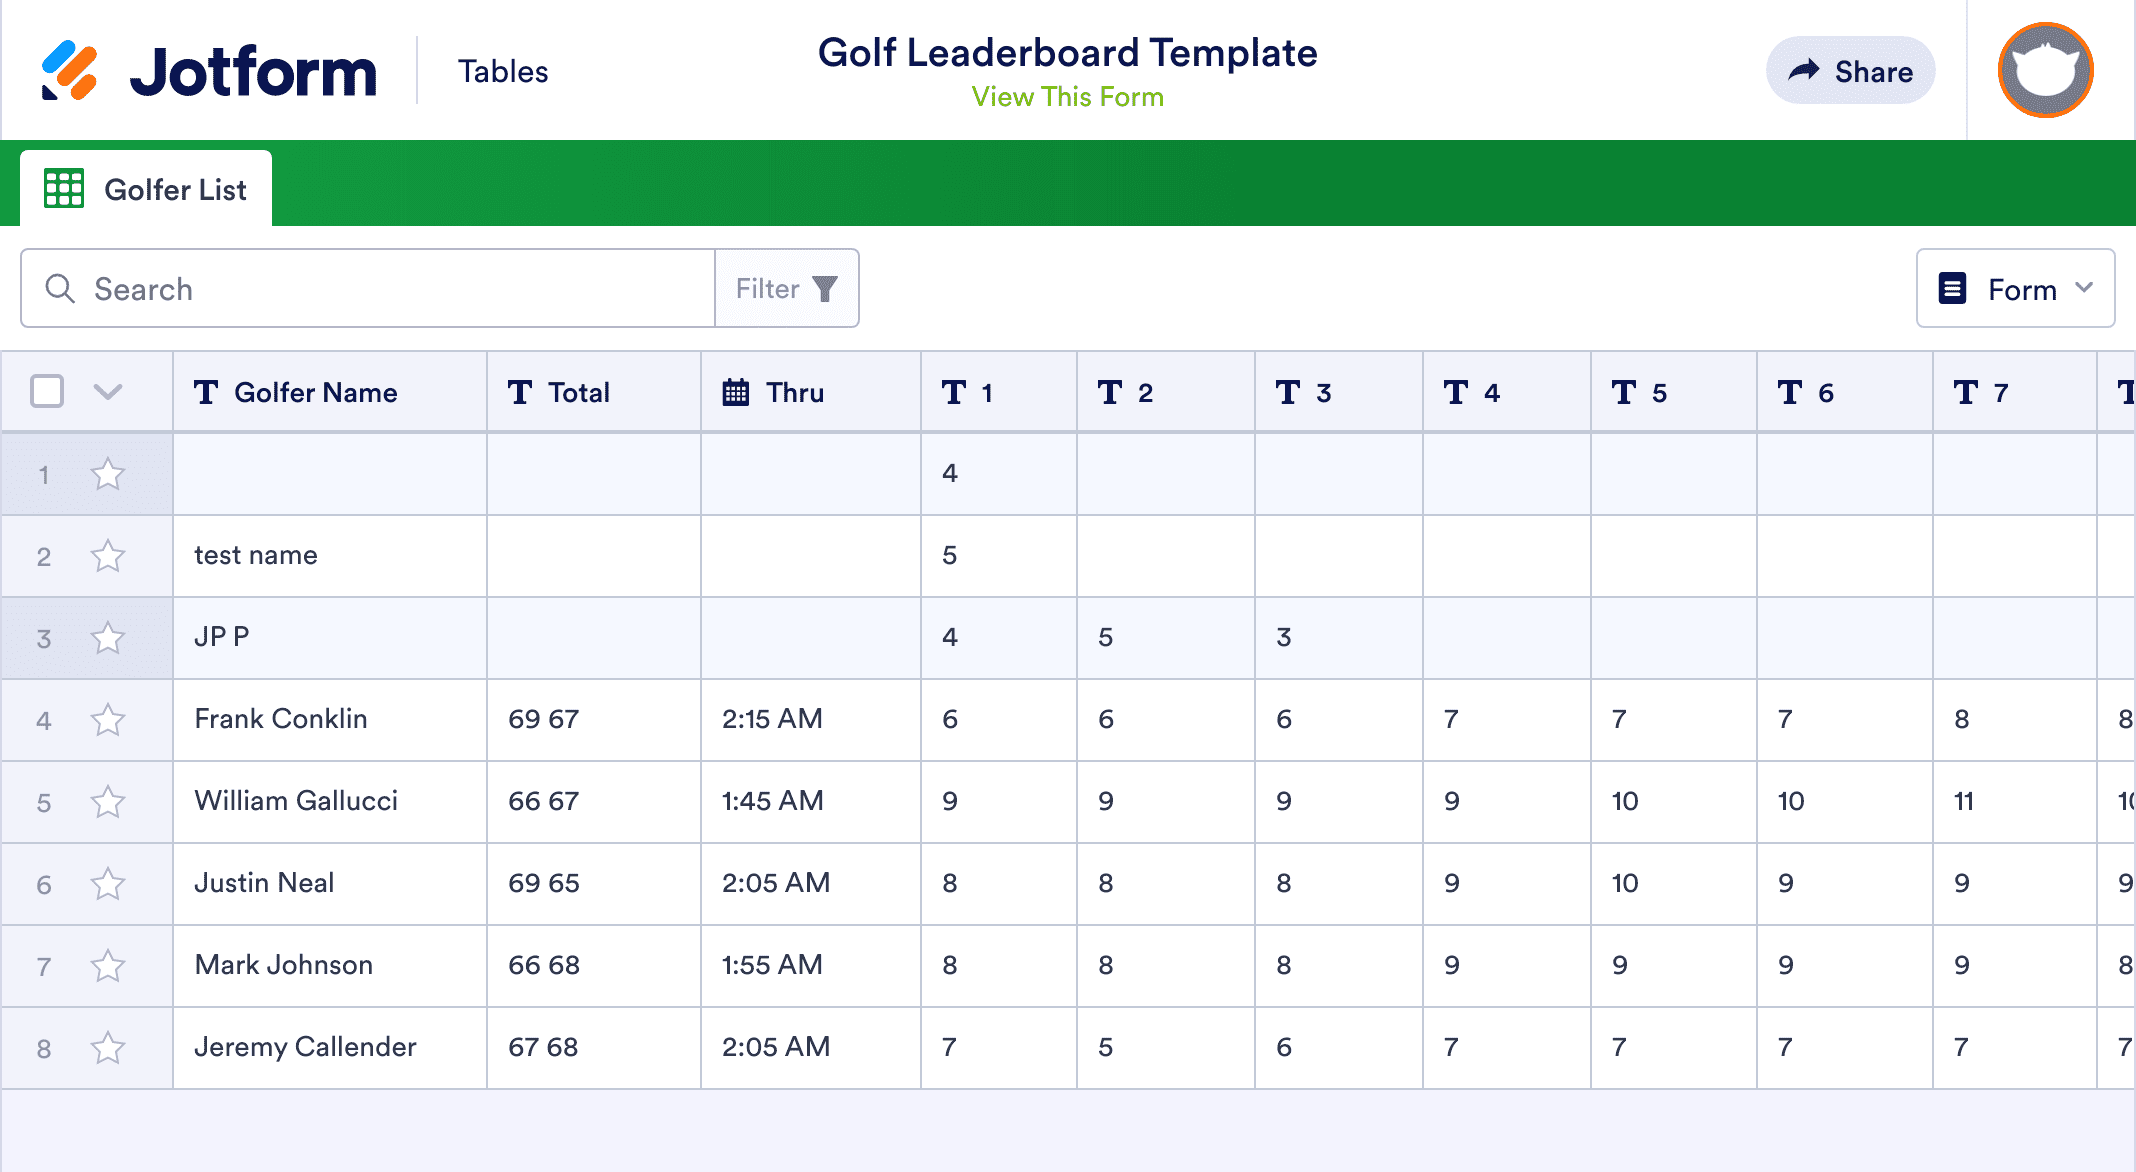 Golf Leaderboard Template Jotform Tables